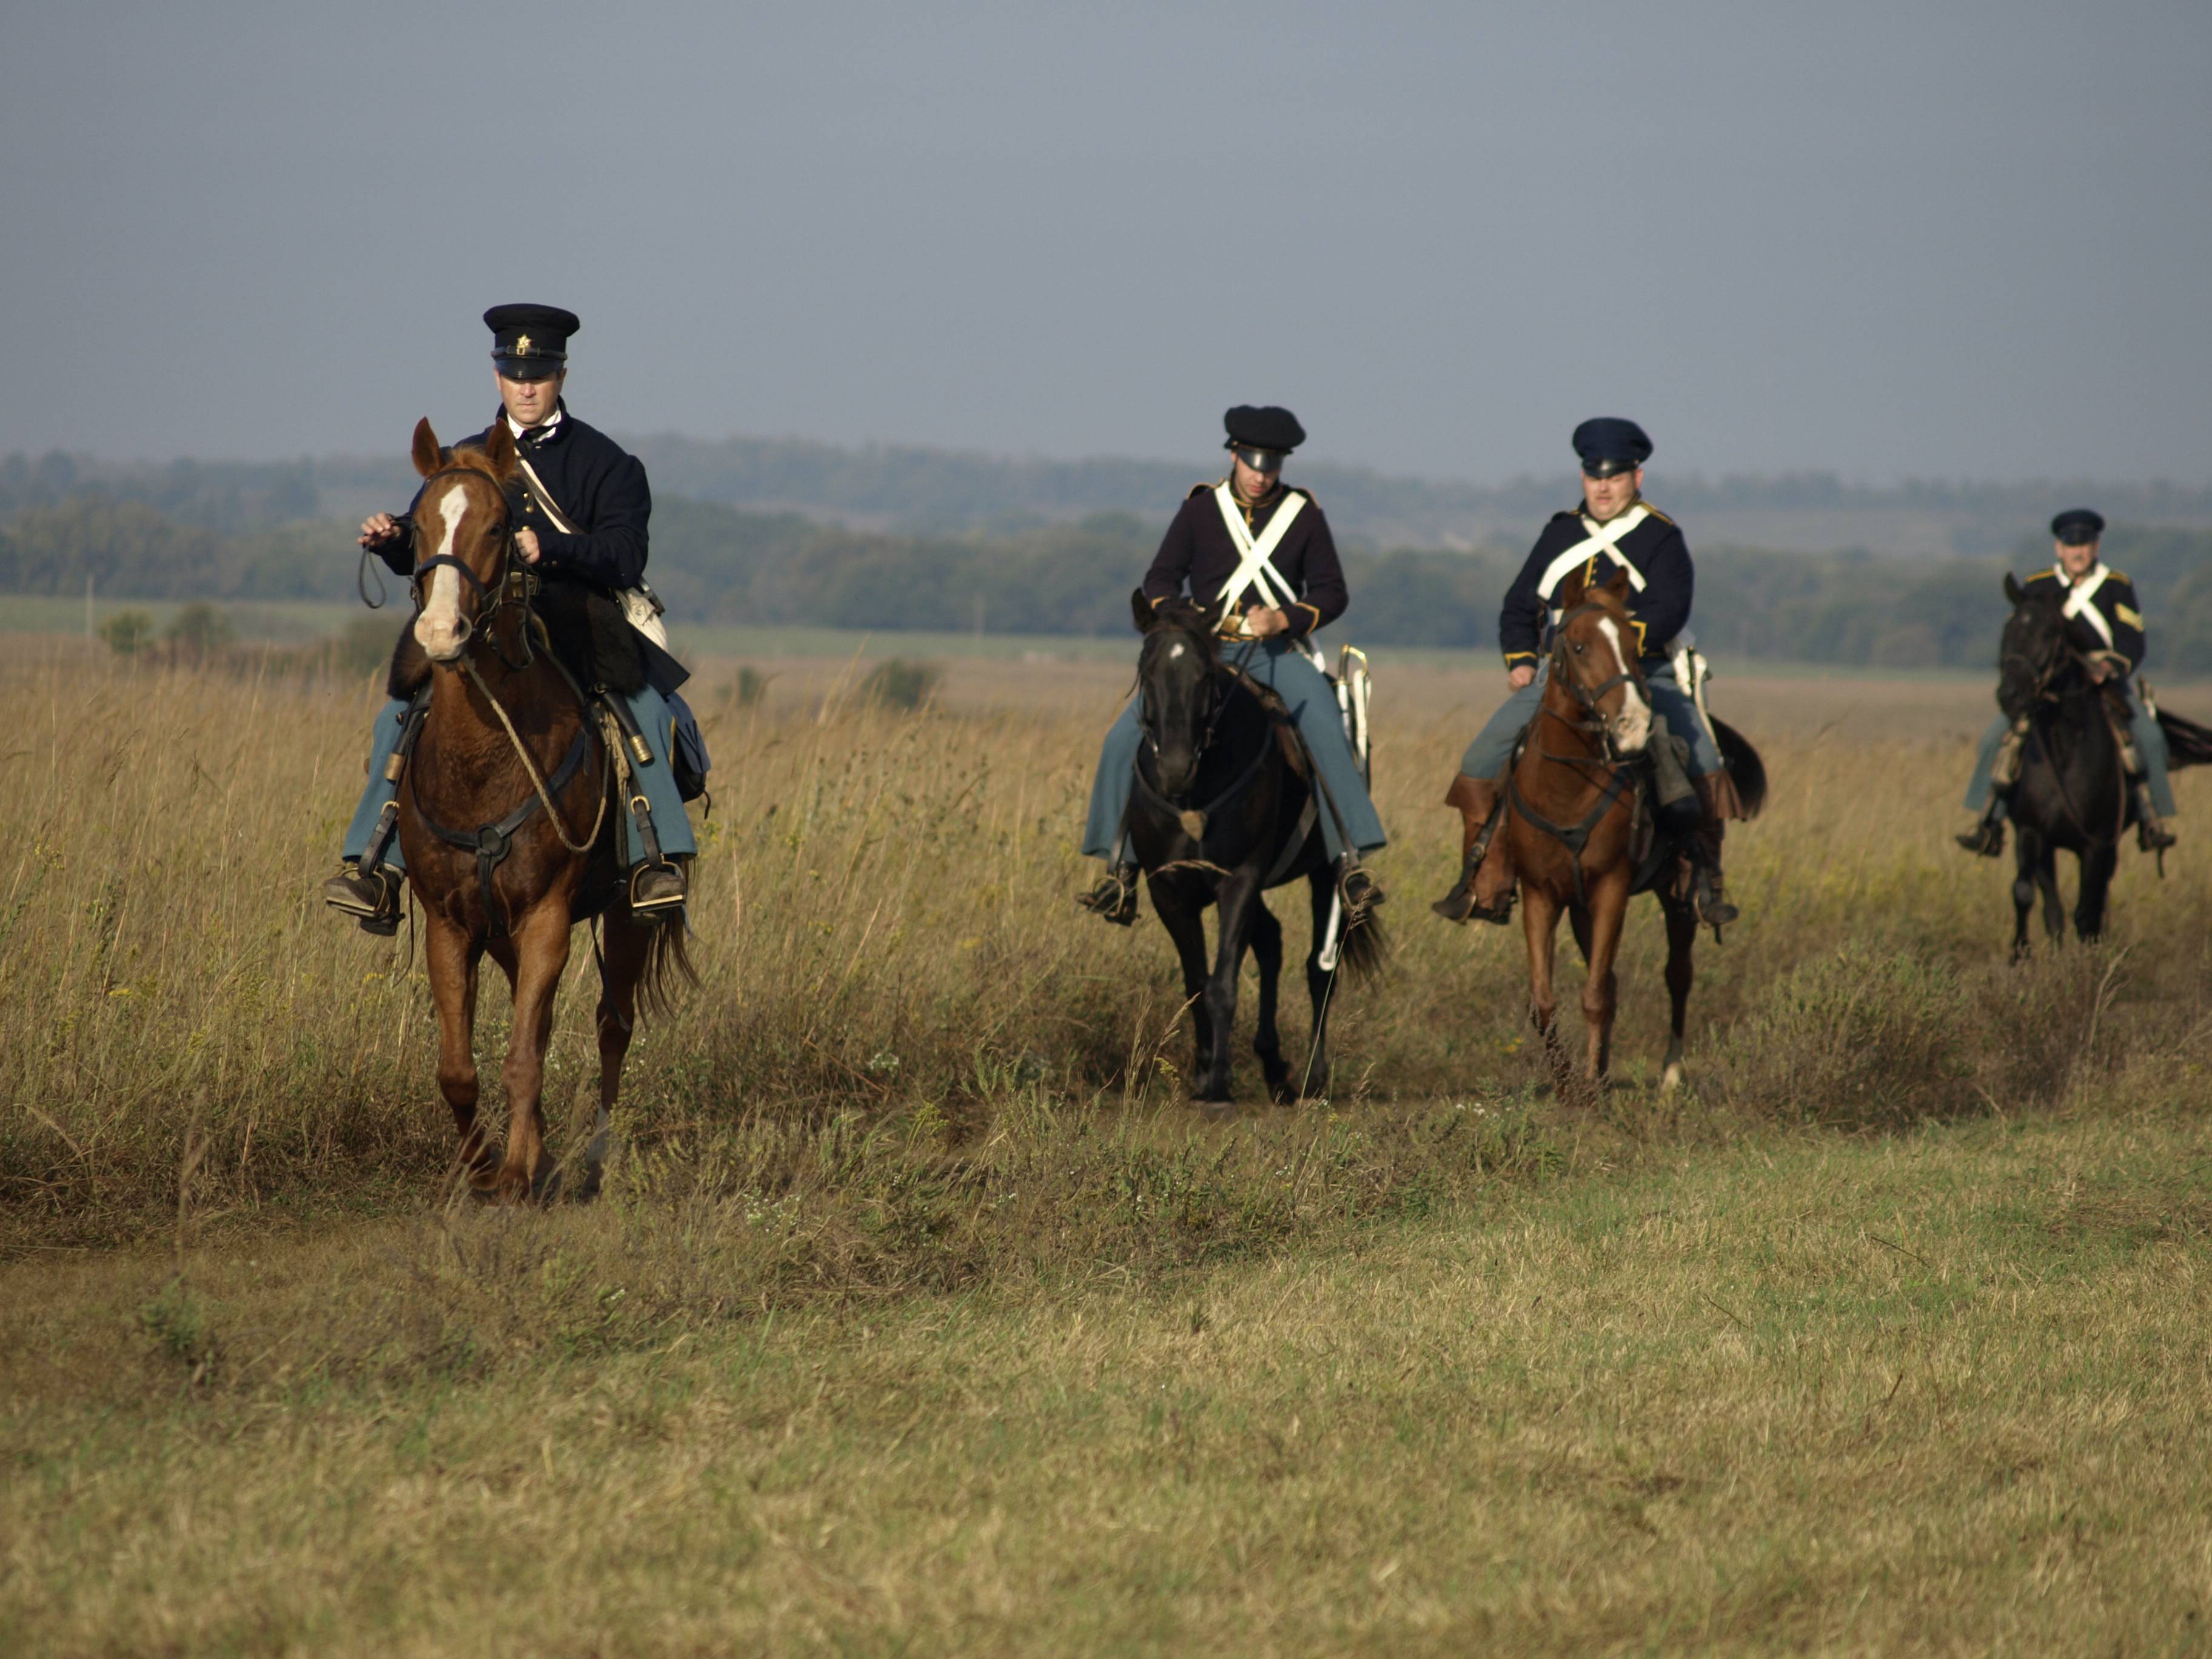 Four soldiers on horseback in a line riding through prairie grass